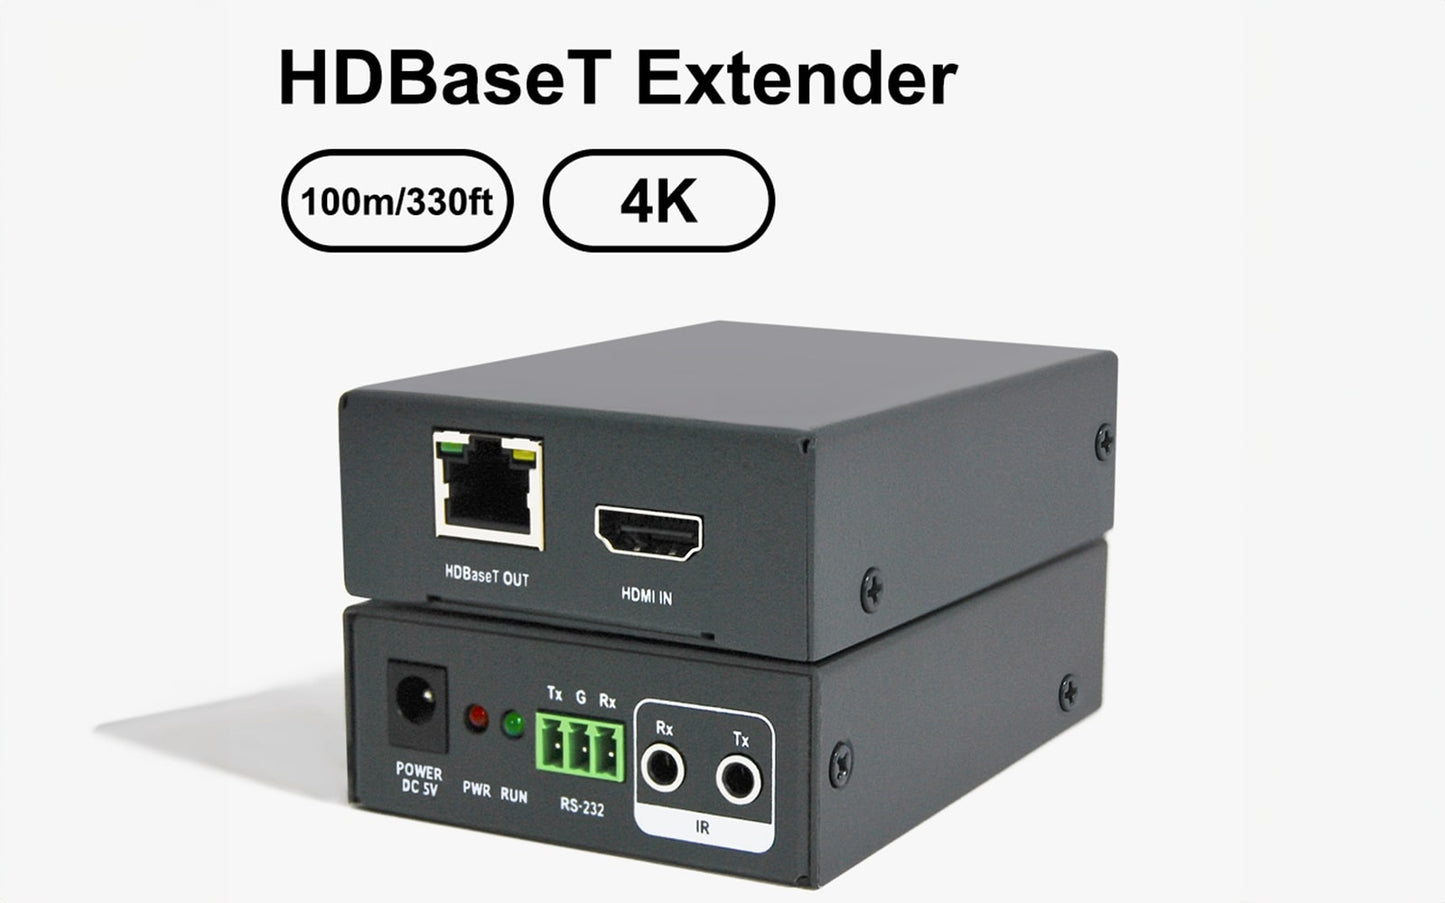 HDBaseT Extender